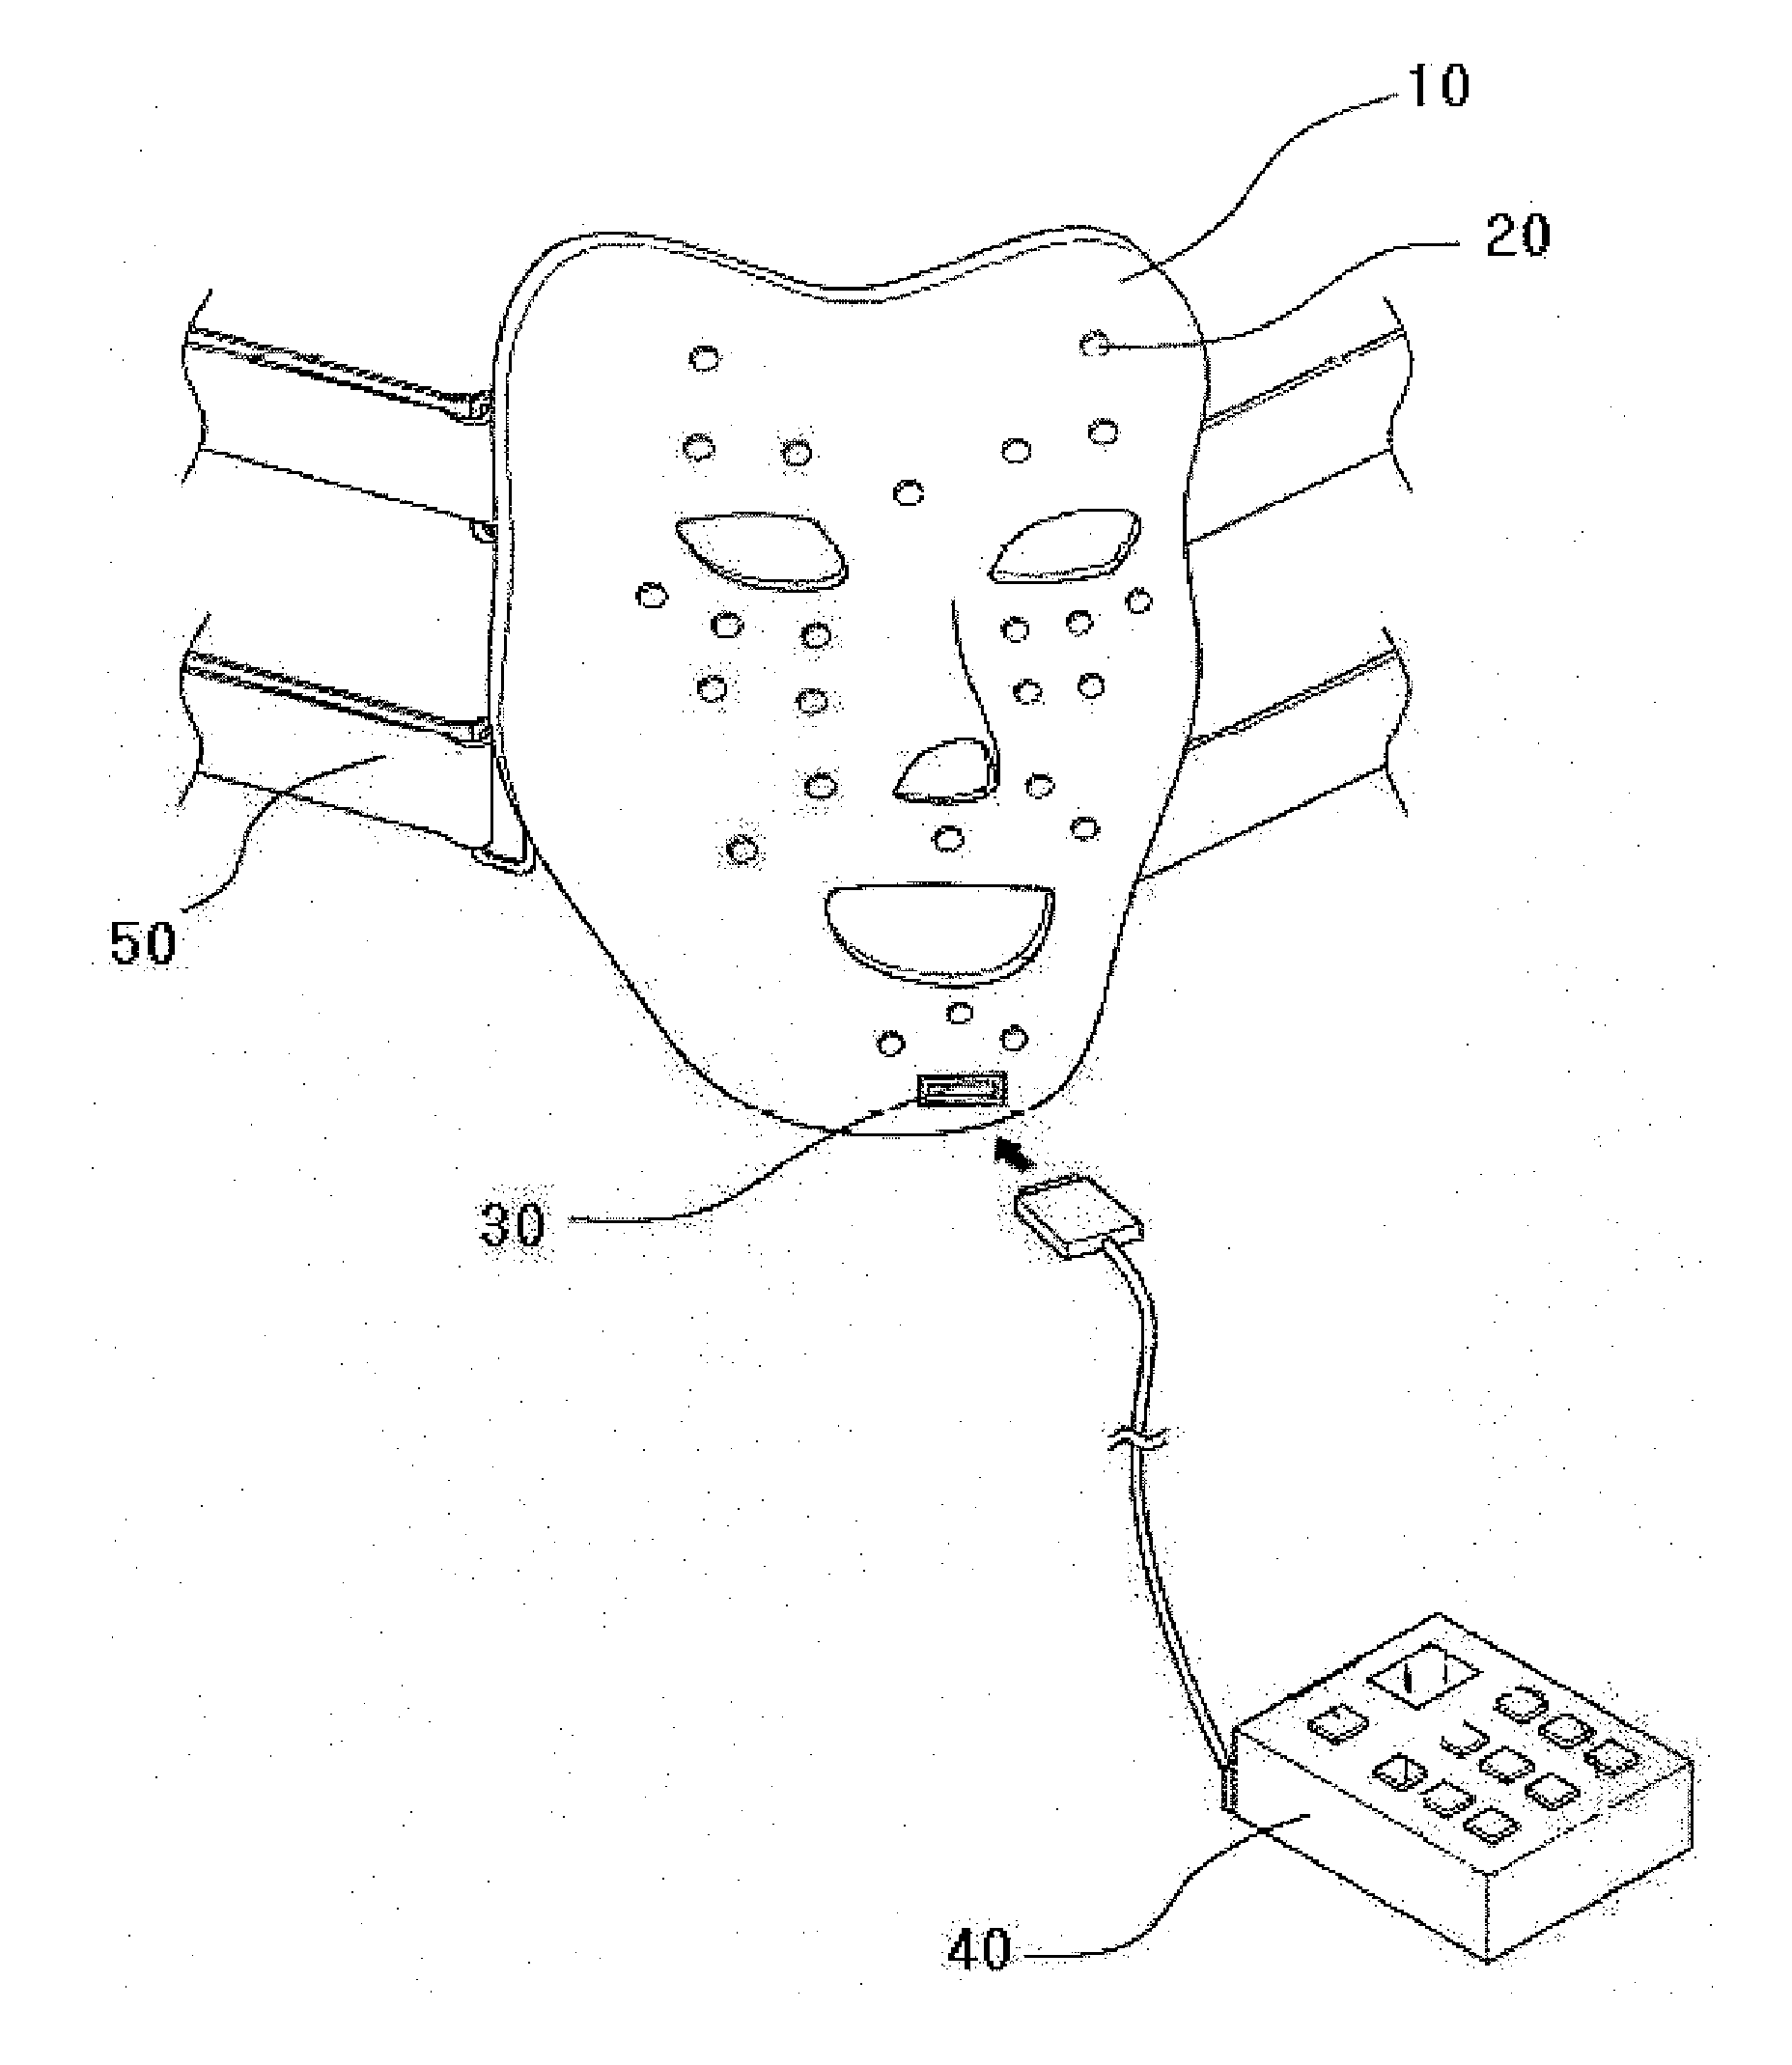 Face massaging device